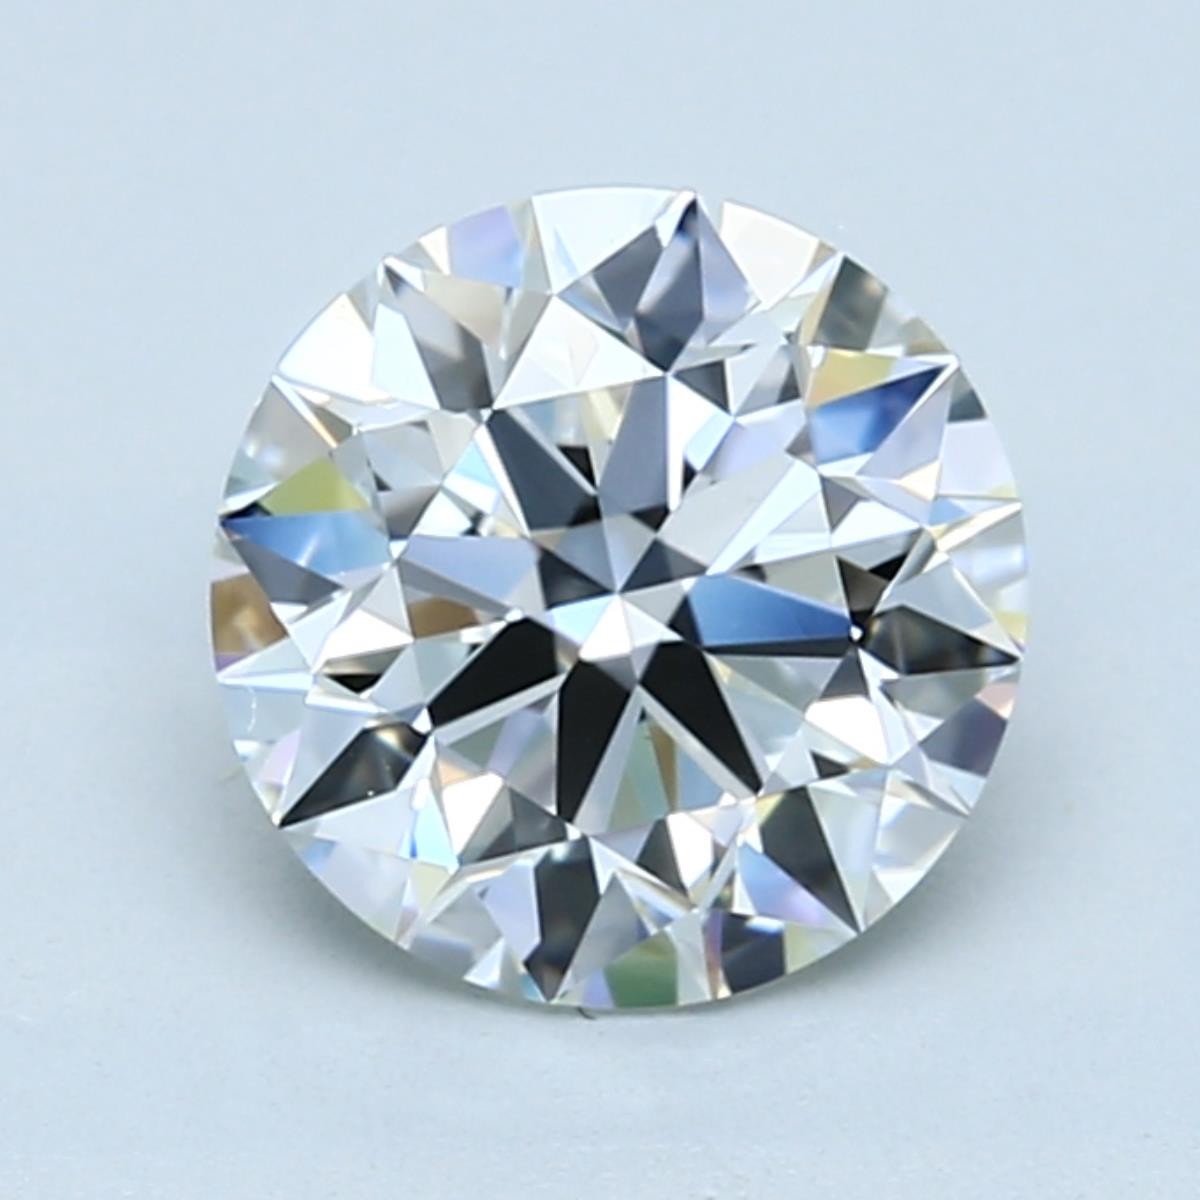 VVS2 clarity diamond